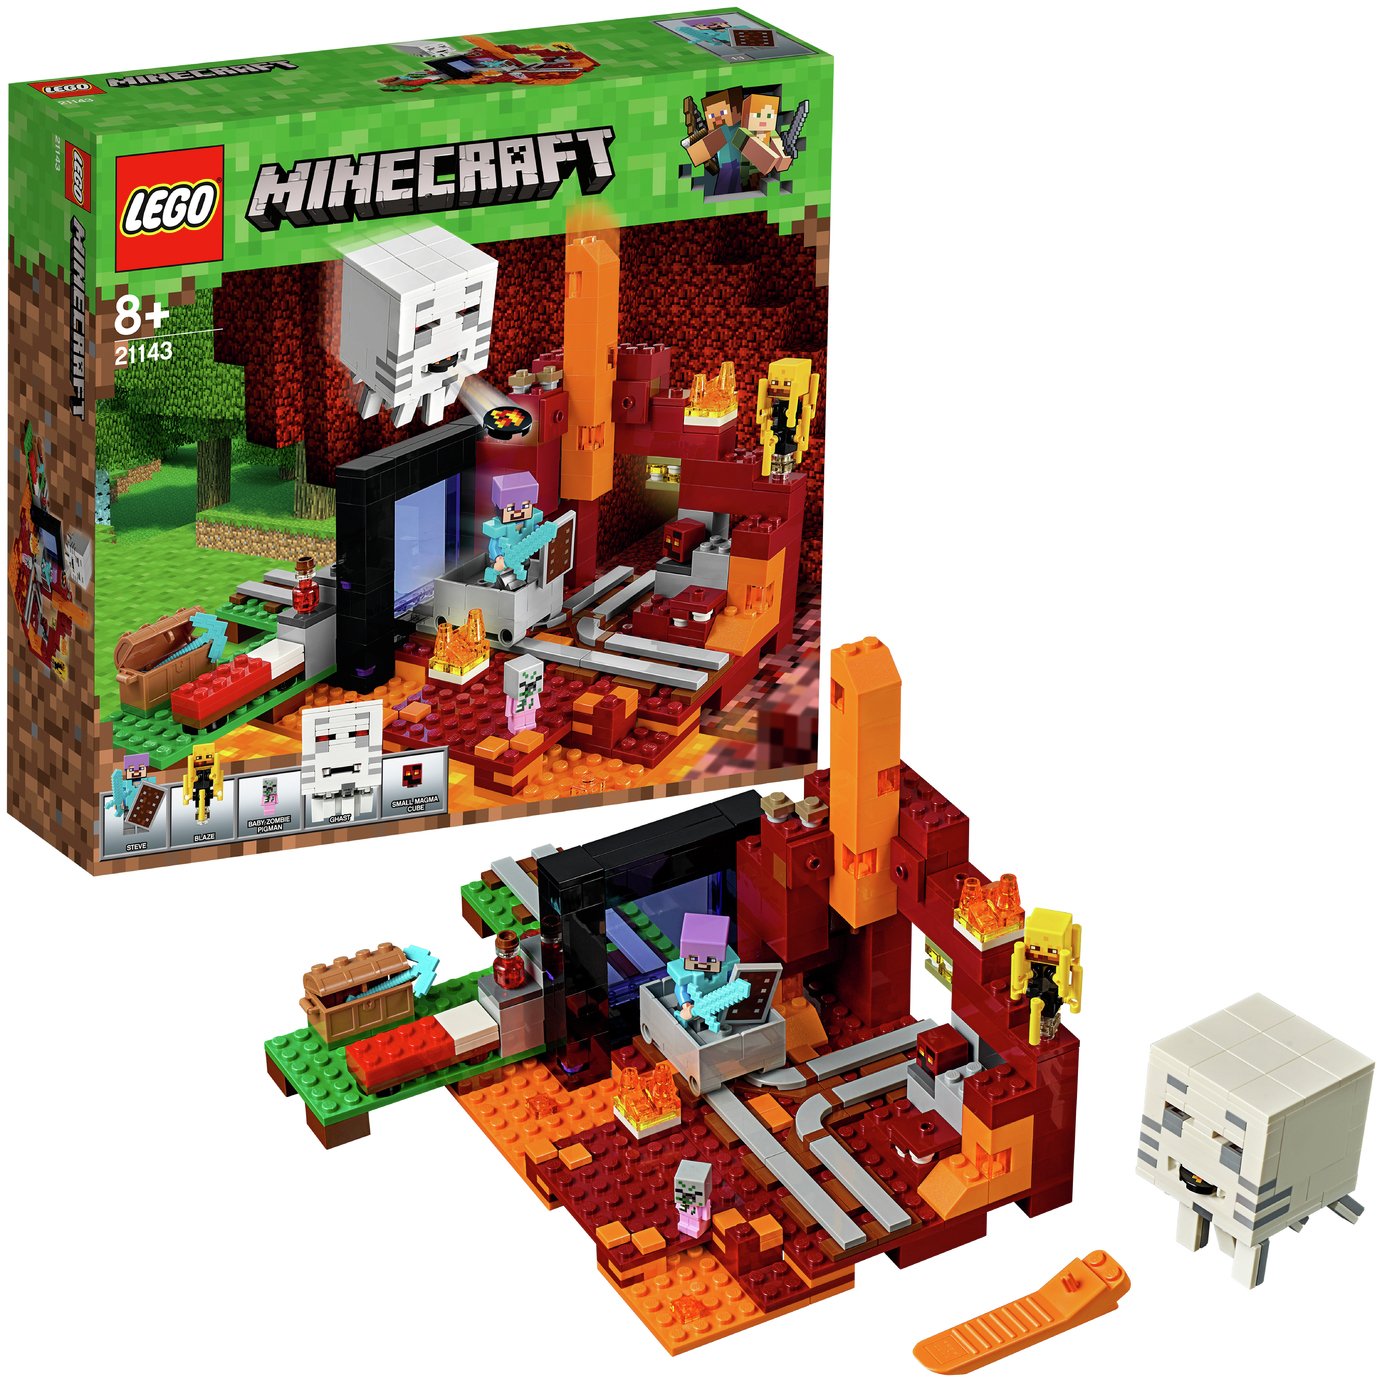 LEGO Minecraft The Nether Portal - 21143